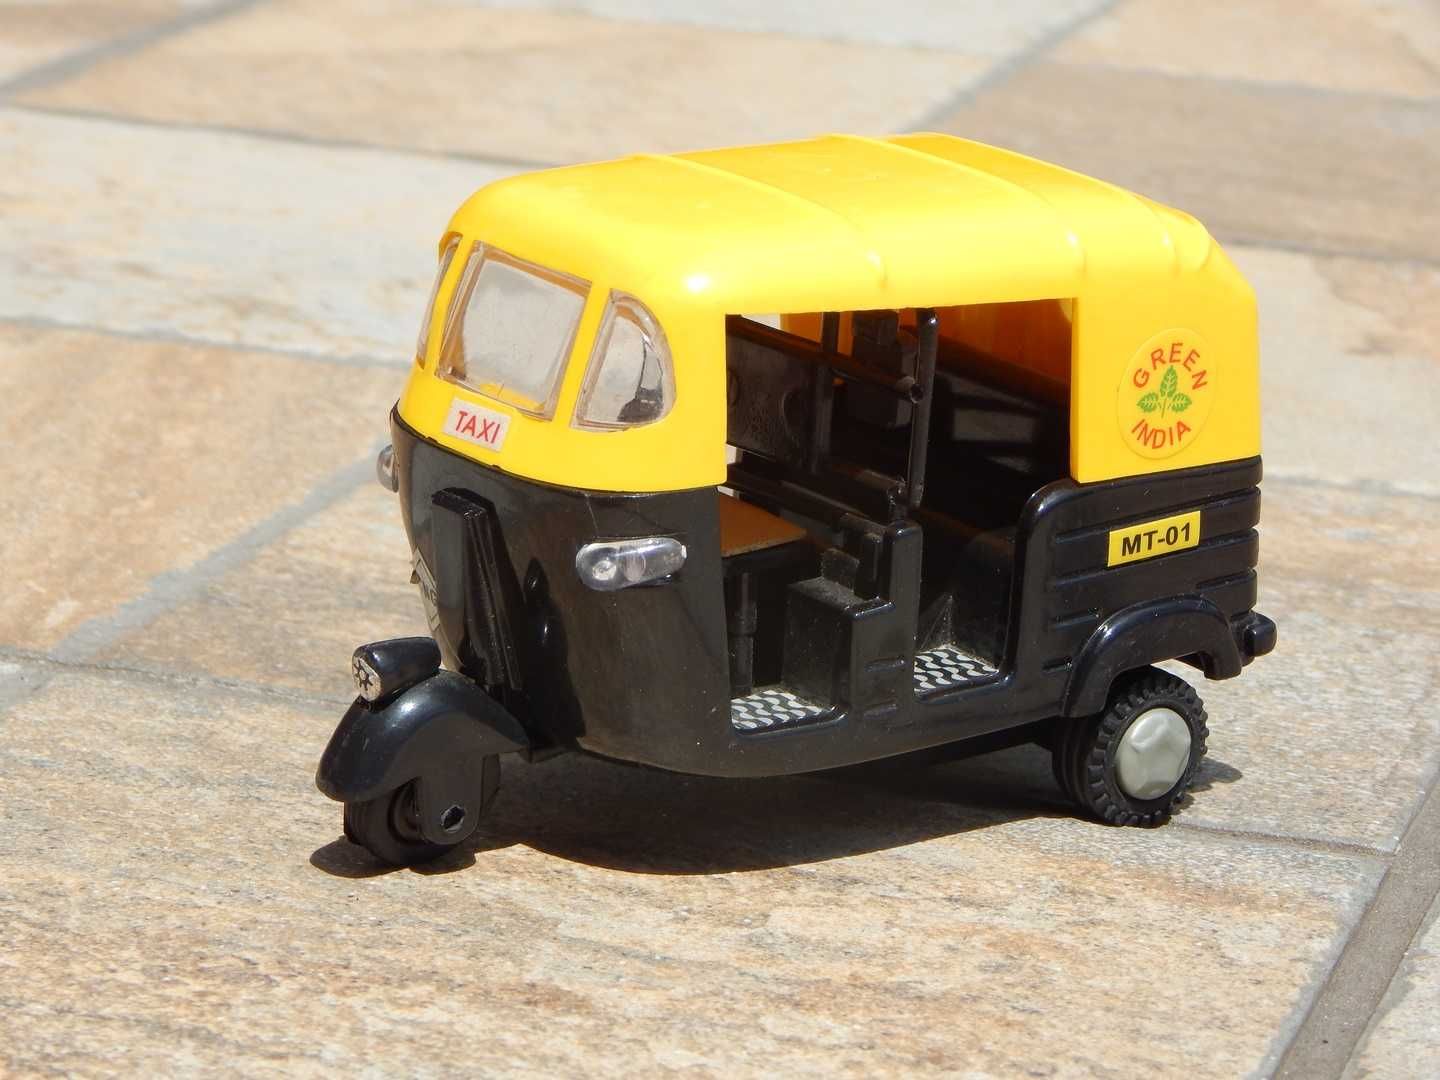 Macheta taxi triciclu indian Tuk Tuk plastic Shinsei fabricata India